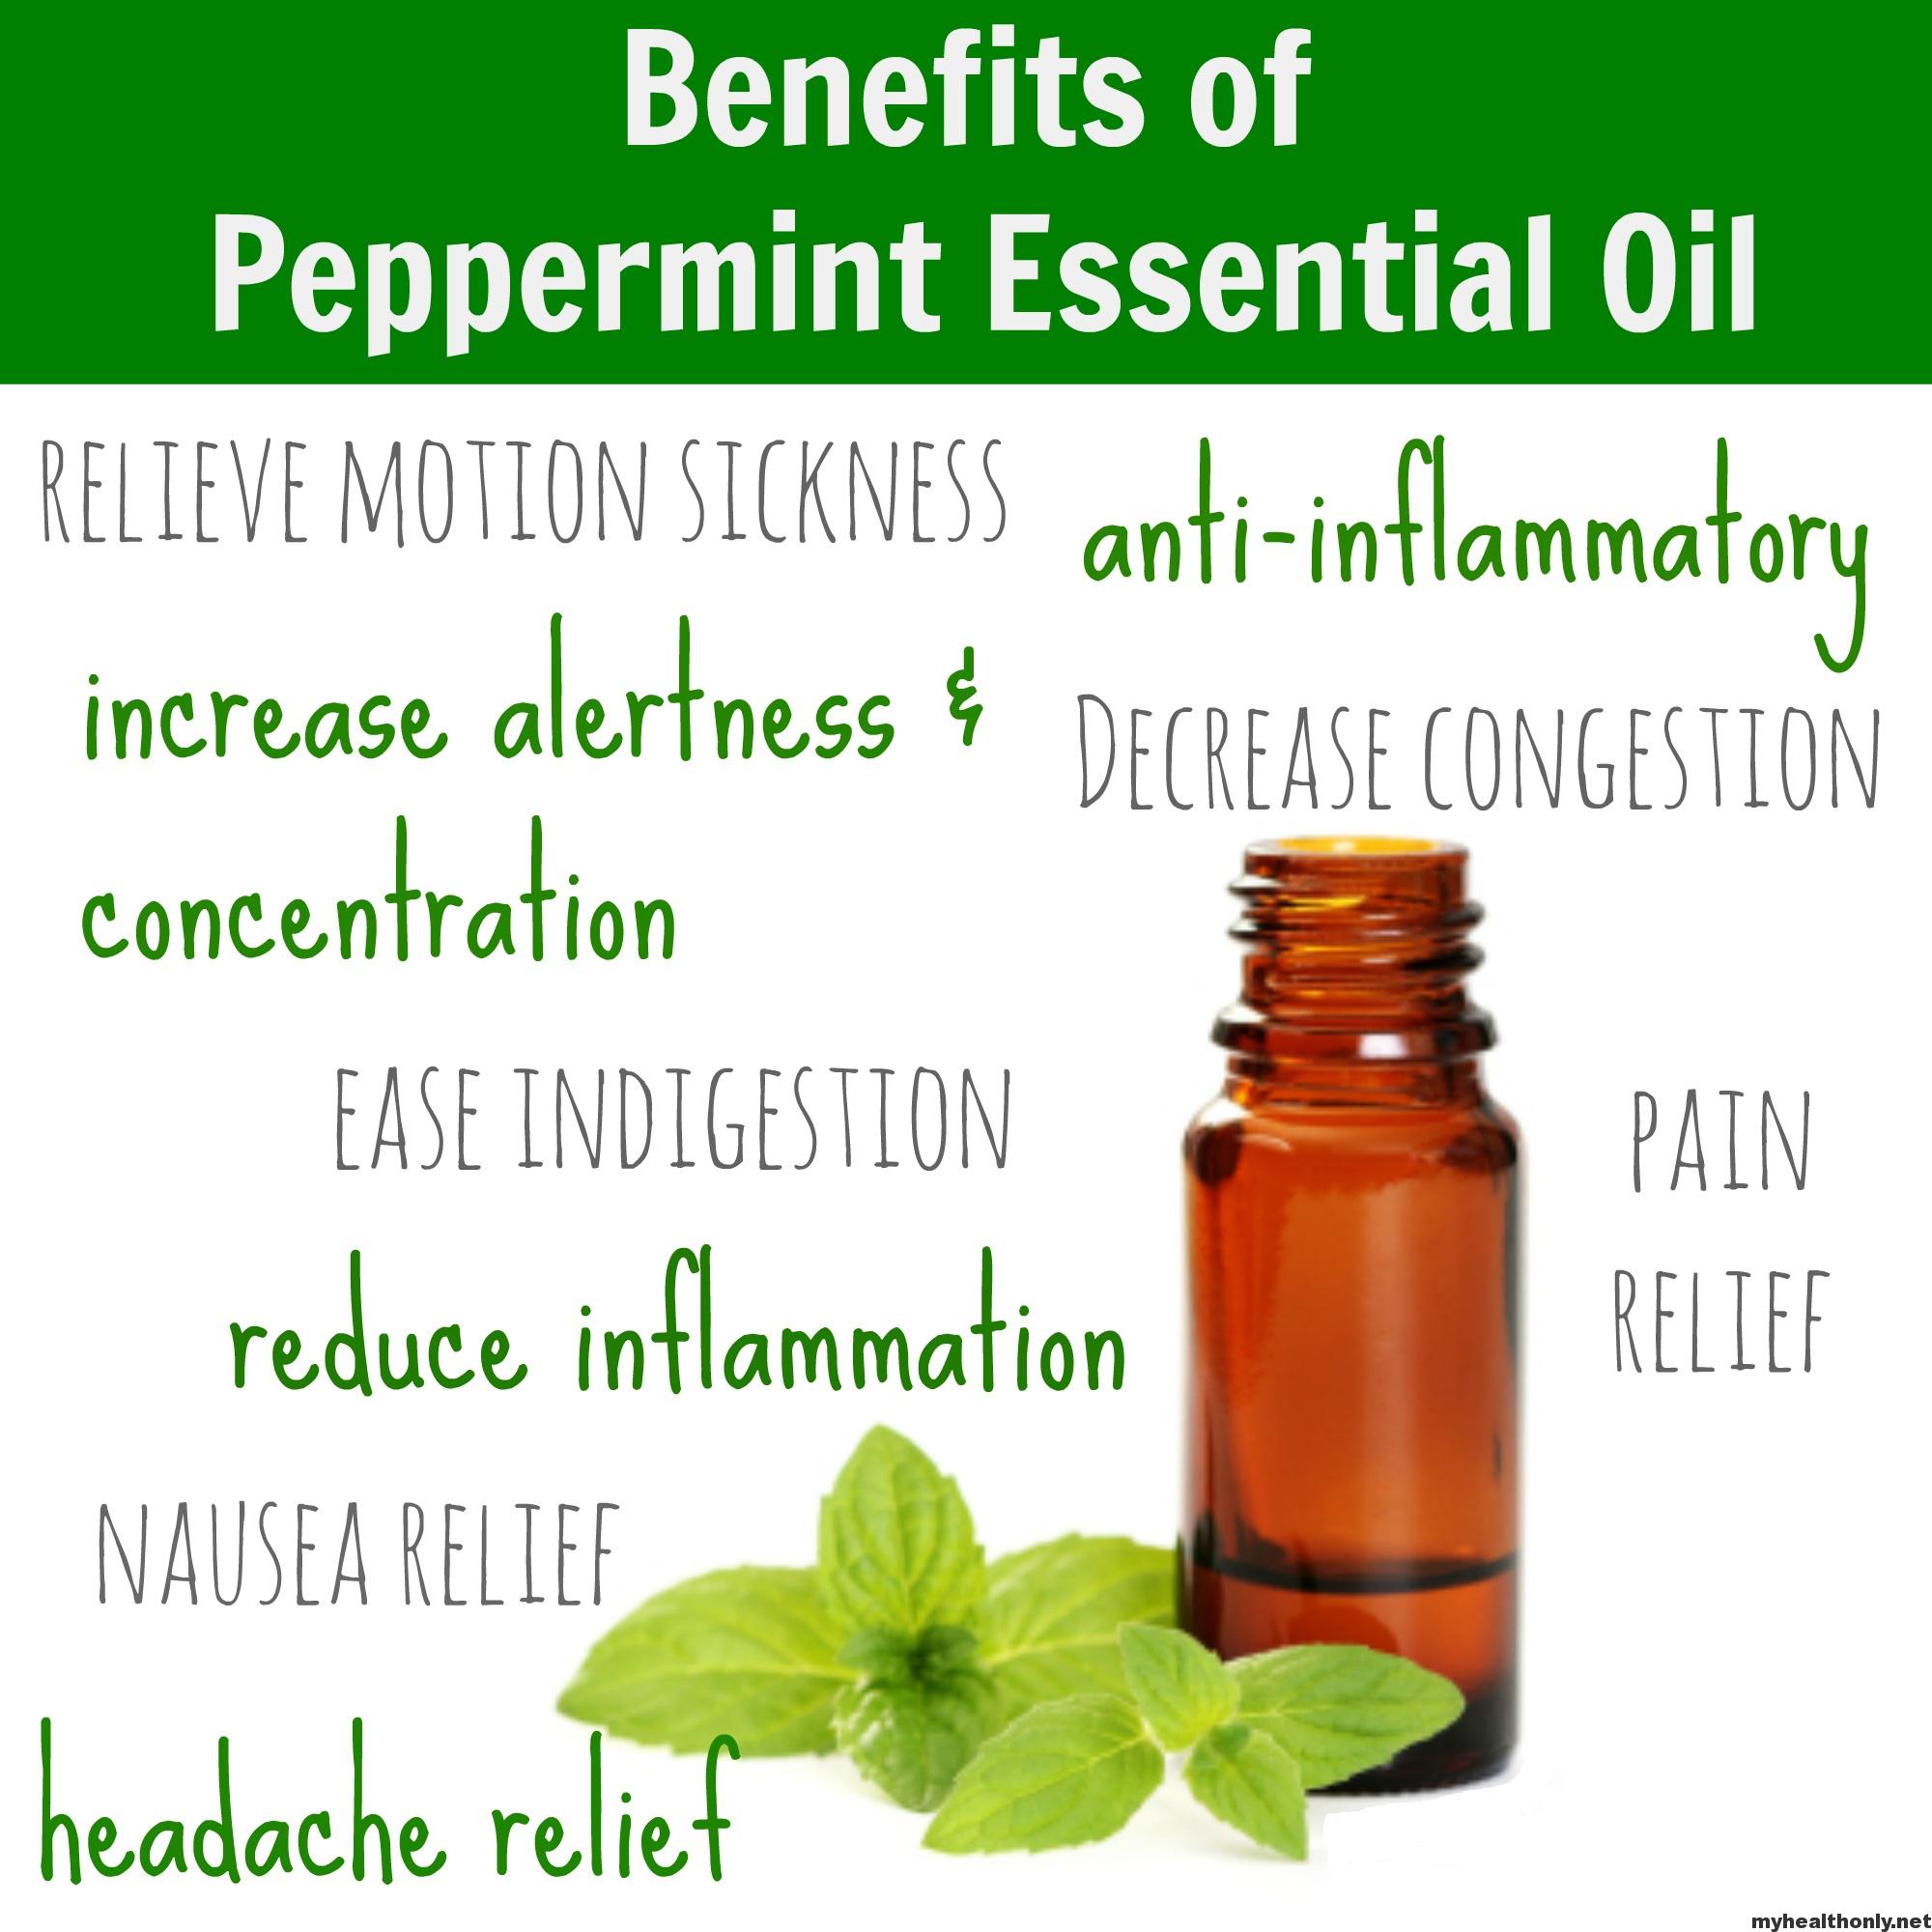 peppermint benefits